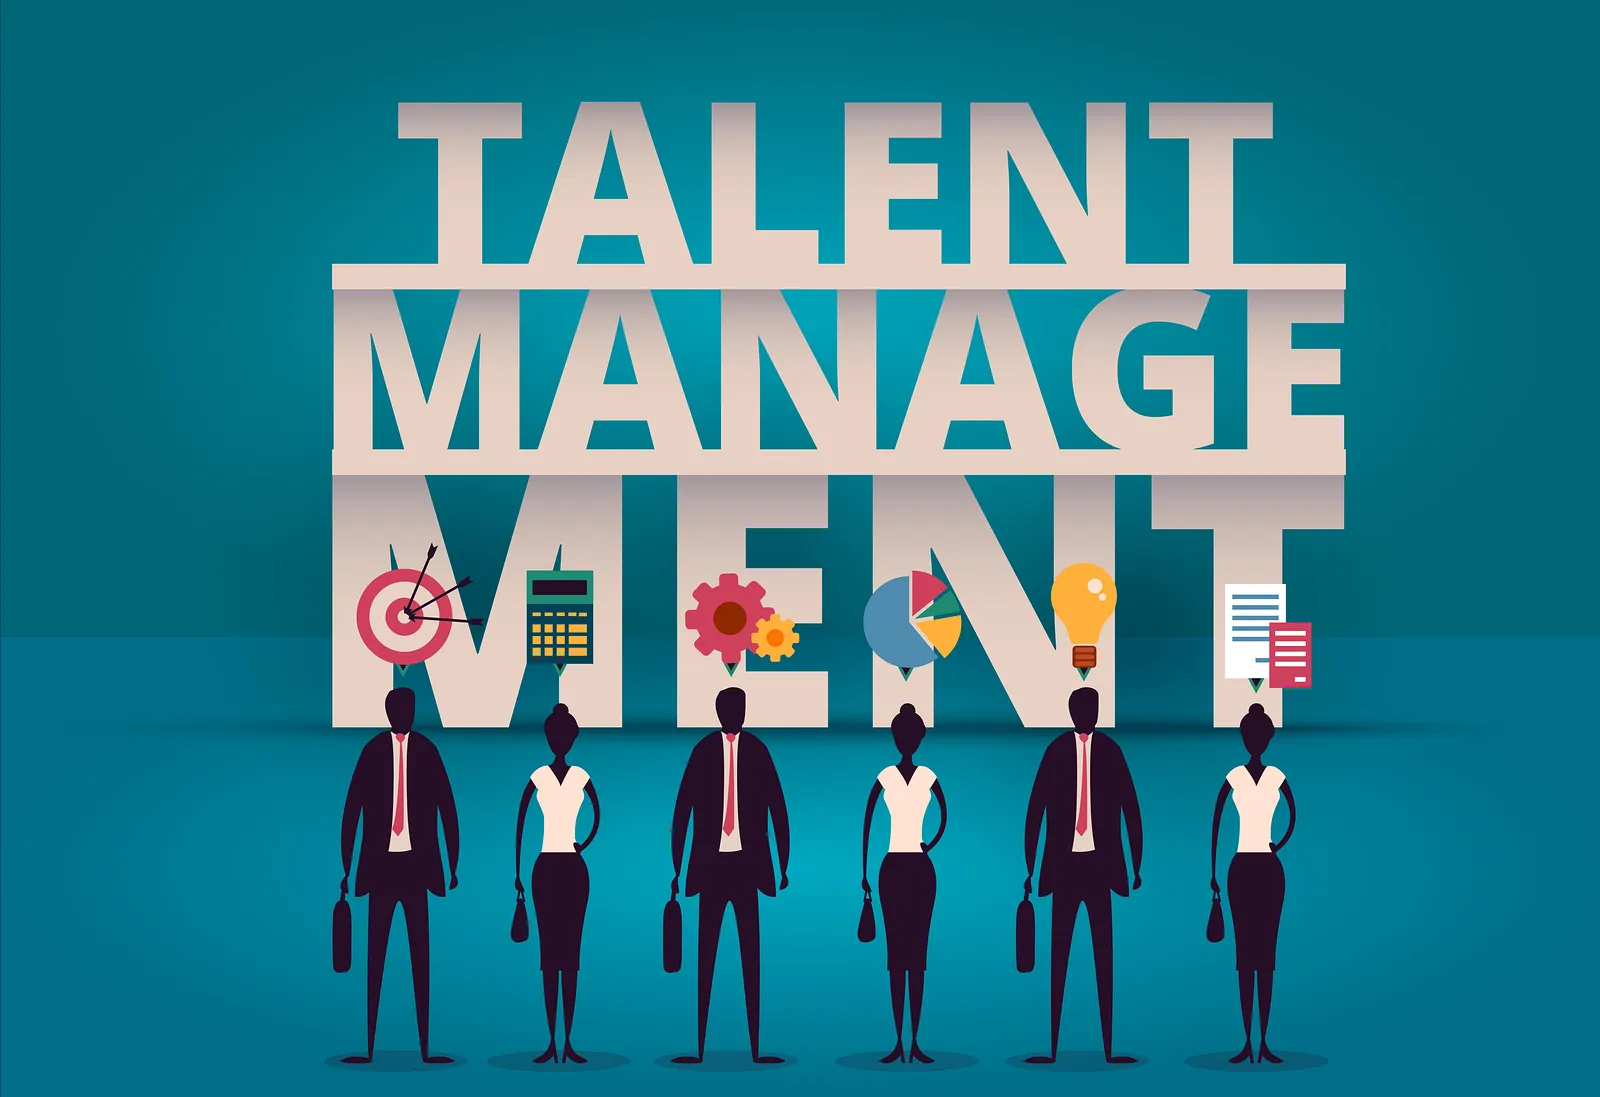 Category: Performance Management » Talent Management